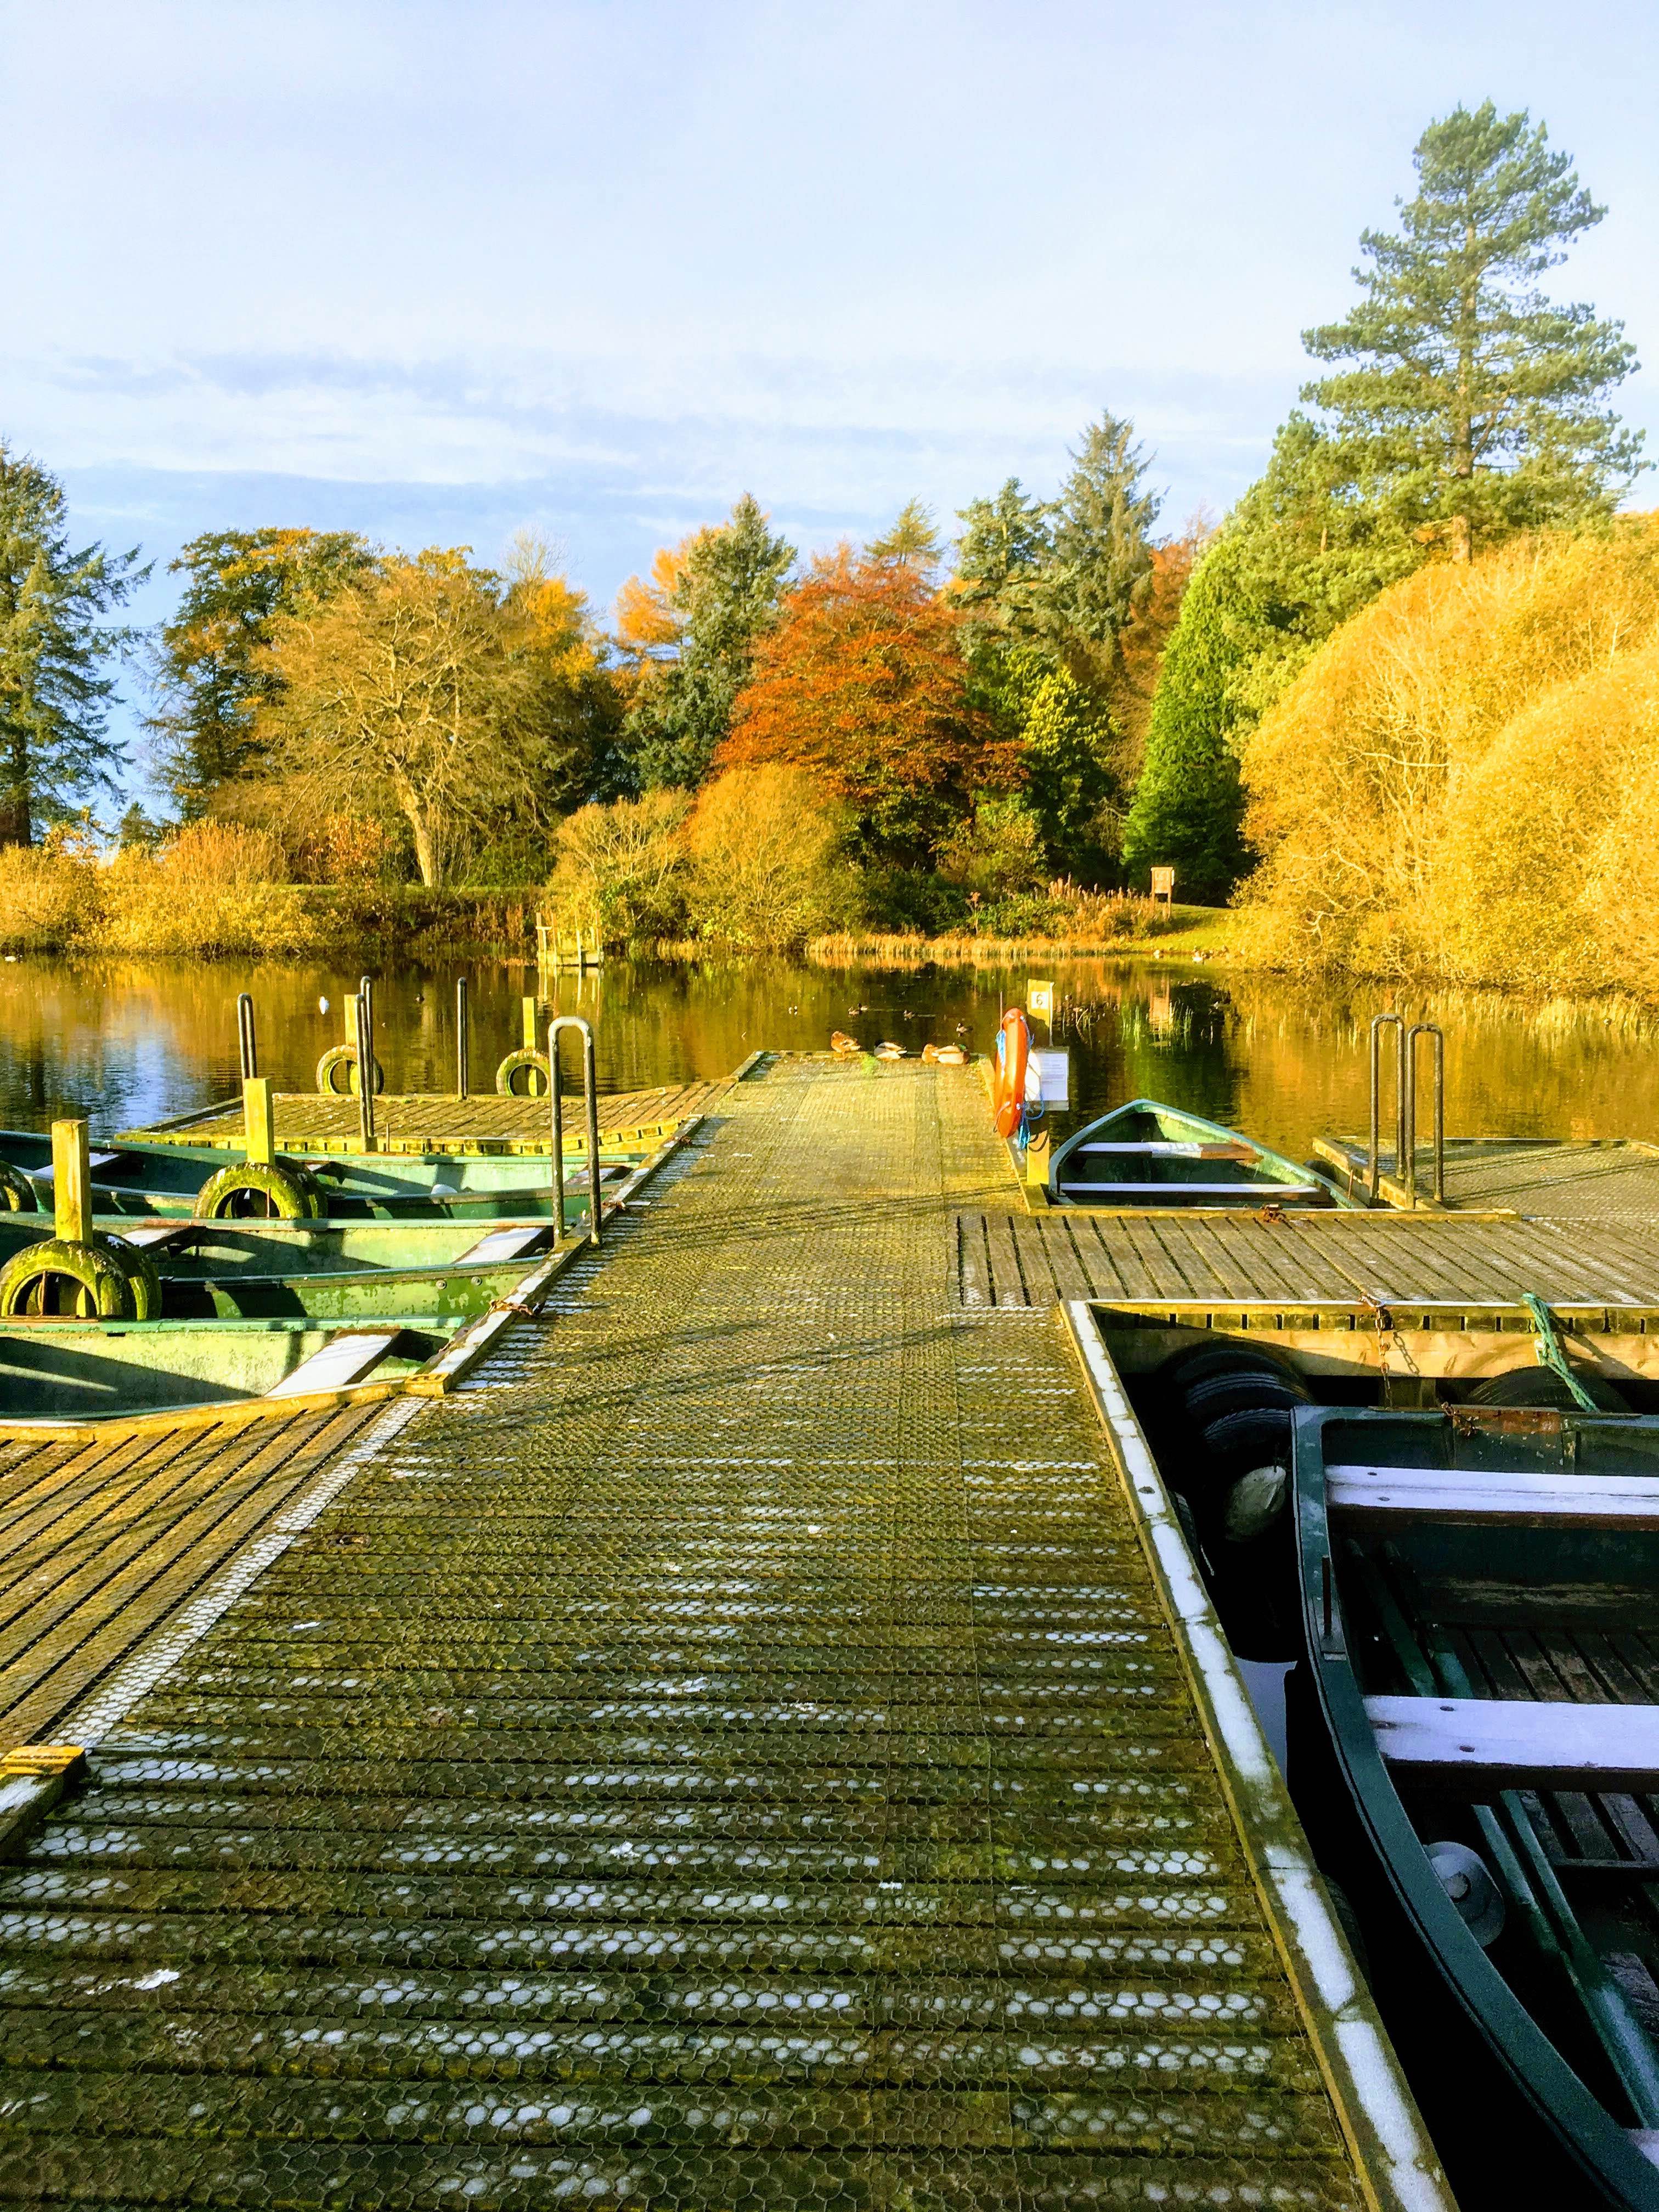 Autumn at the Island Pond.